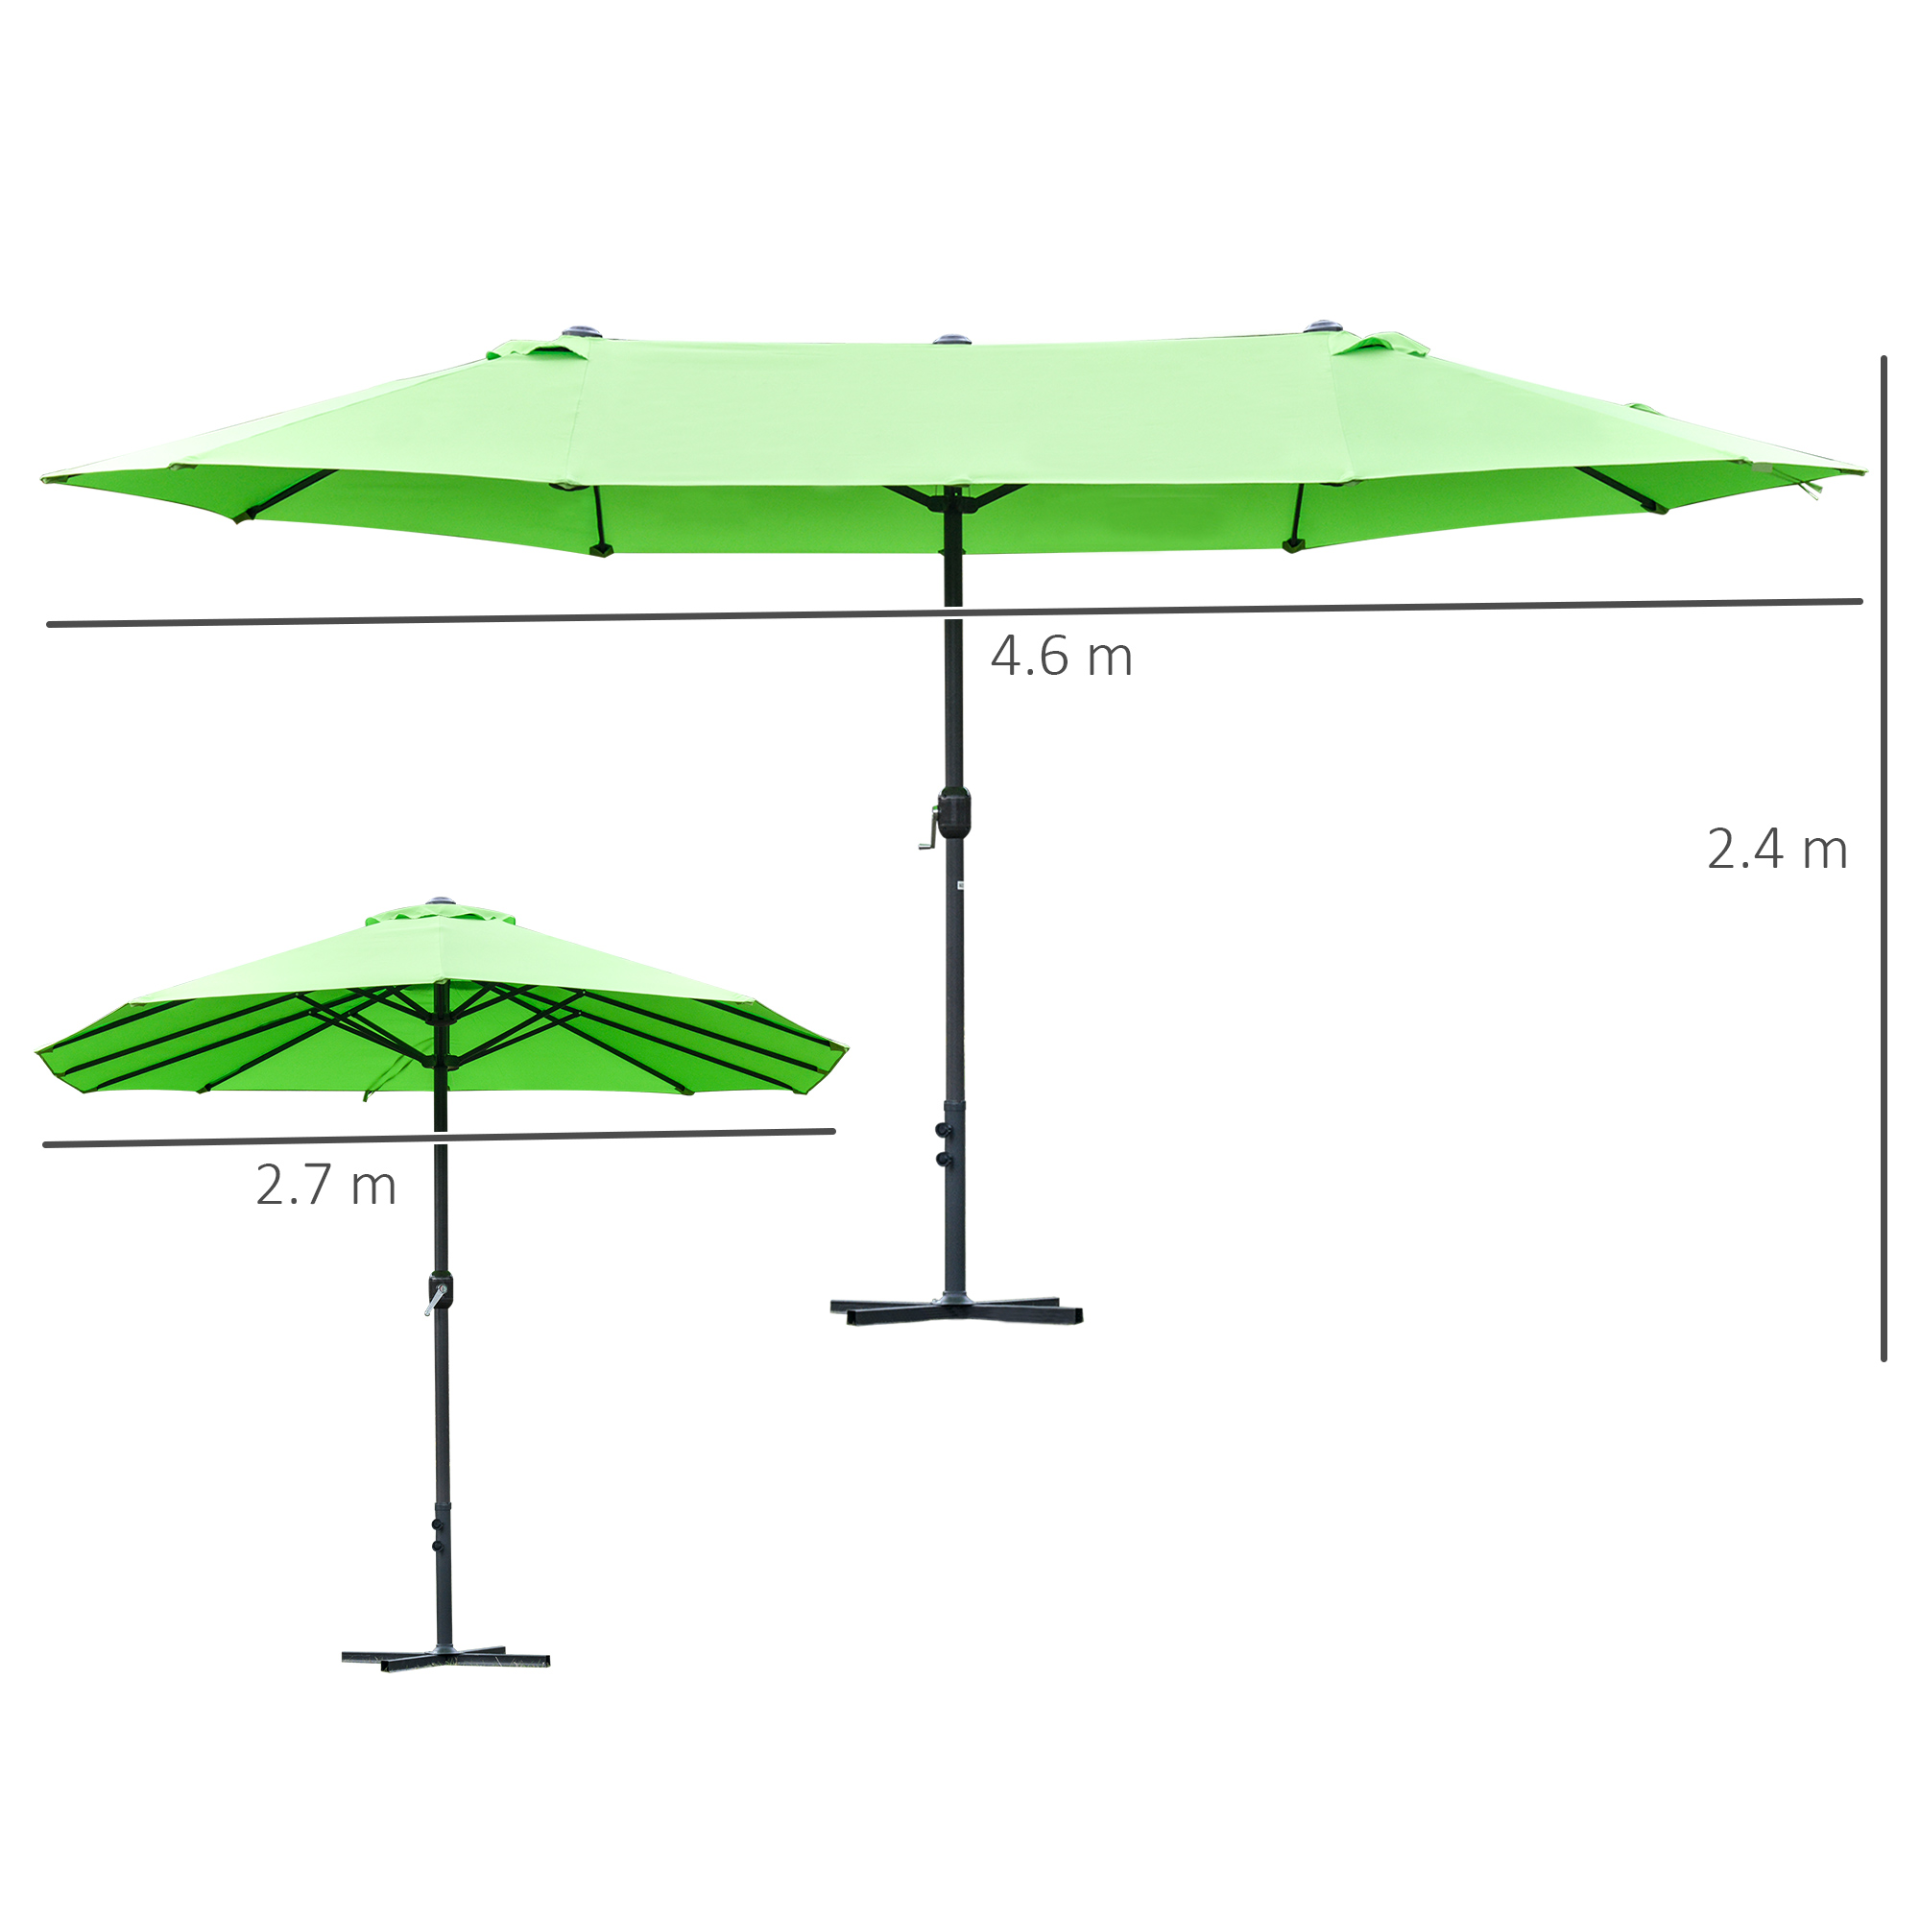 Outsunny 4.6m Garden Parasol Double-Sided Sun Umbrella Patio Market Shelter Canopy Shade Outdoor with Cross Base – Green